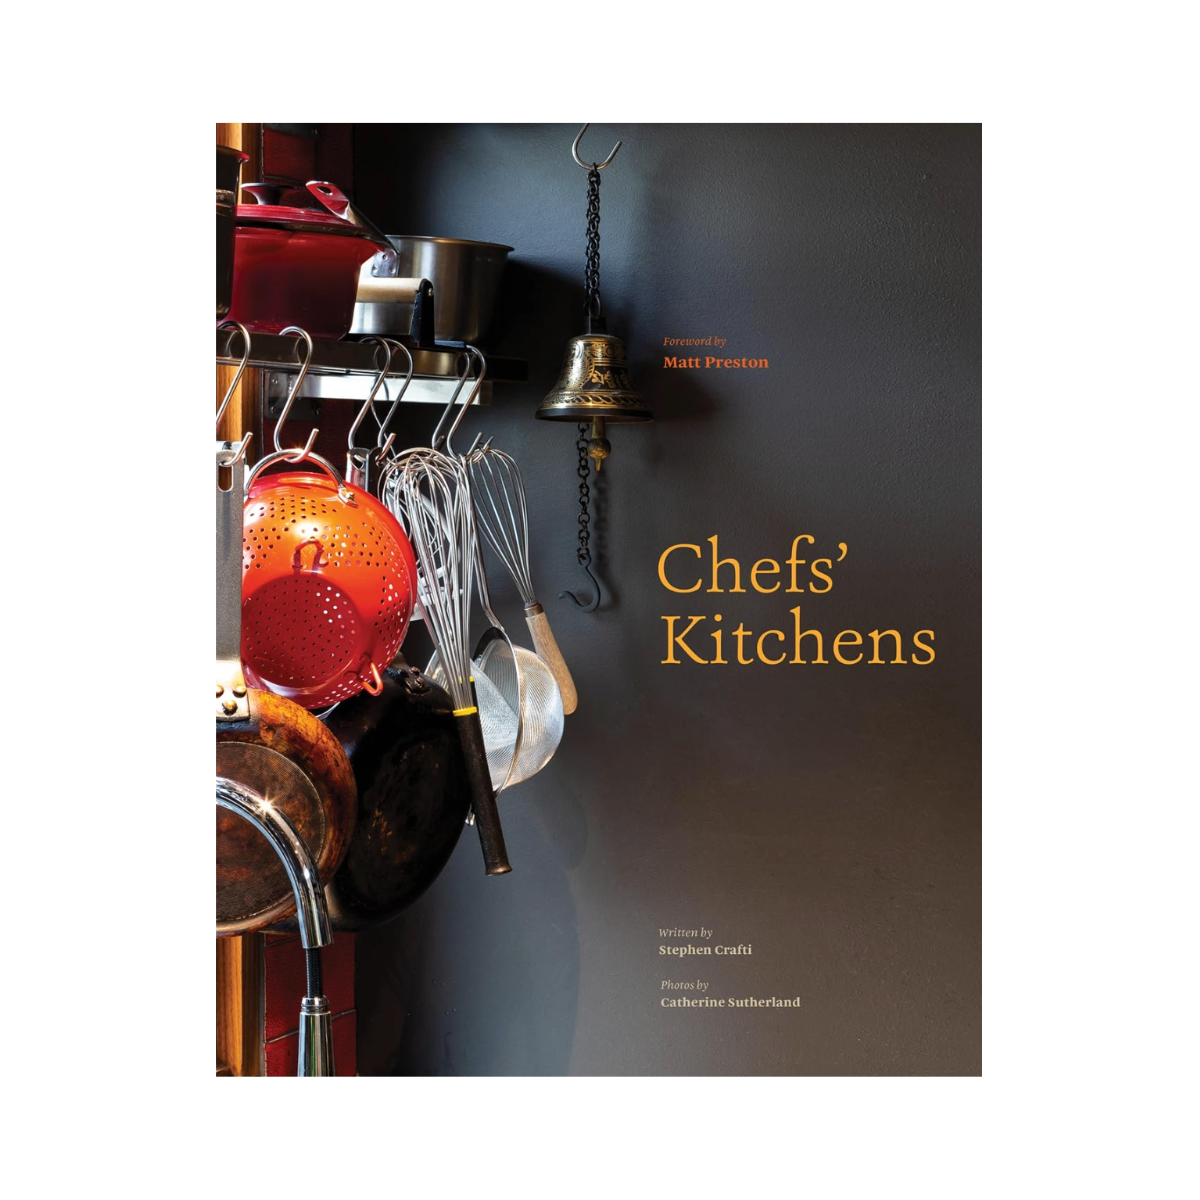 Chef's Kitchens by Stephen Crafti